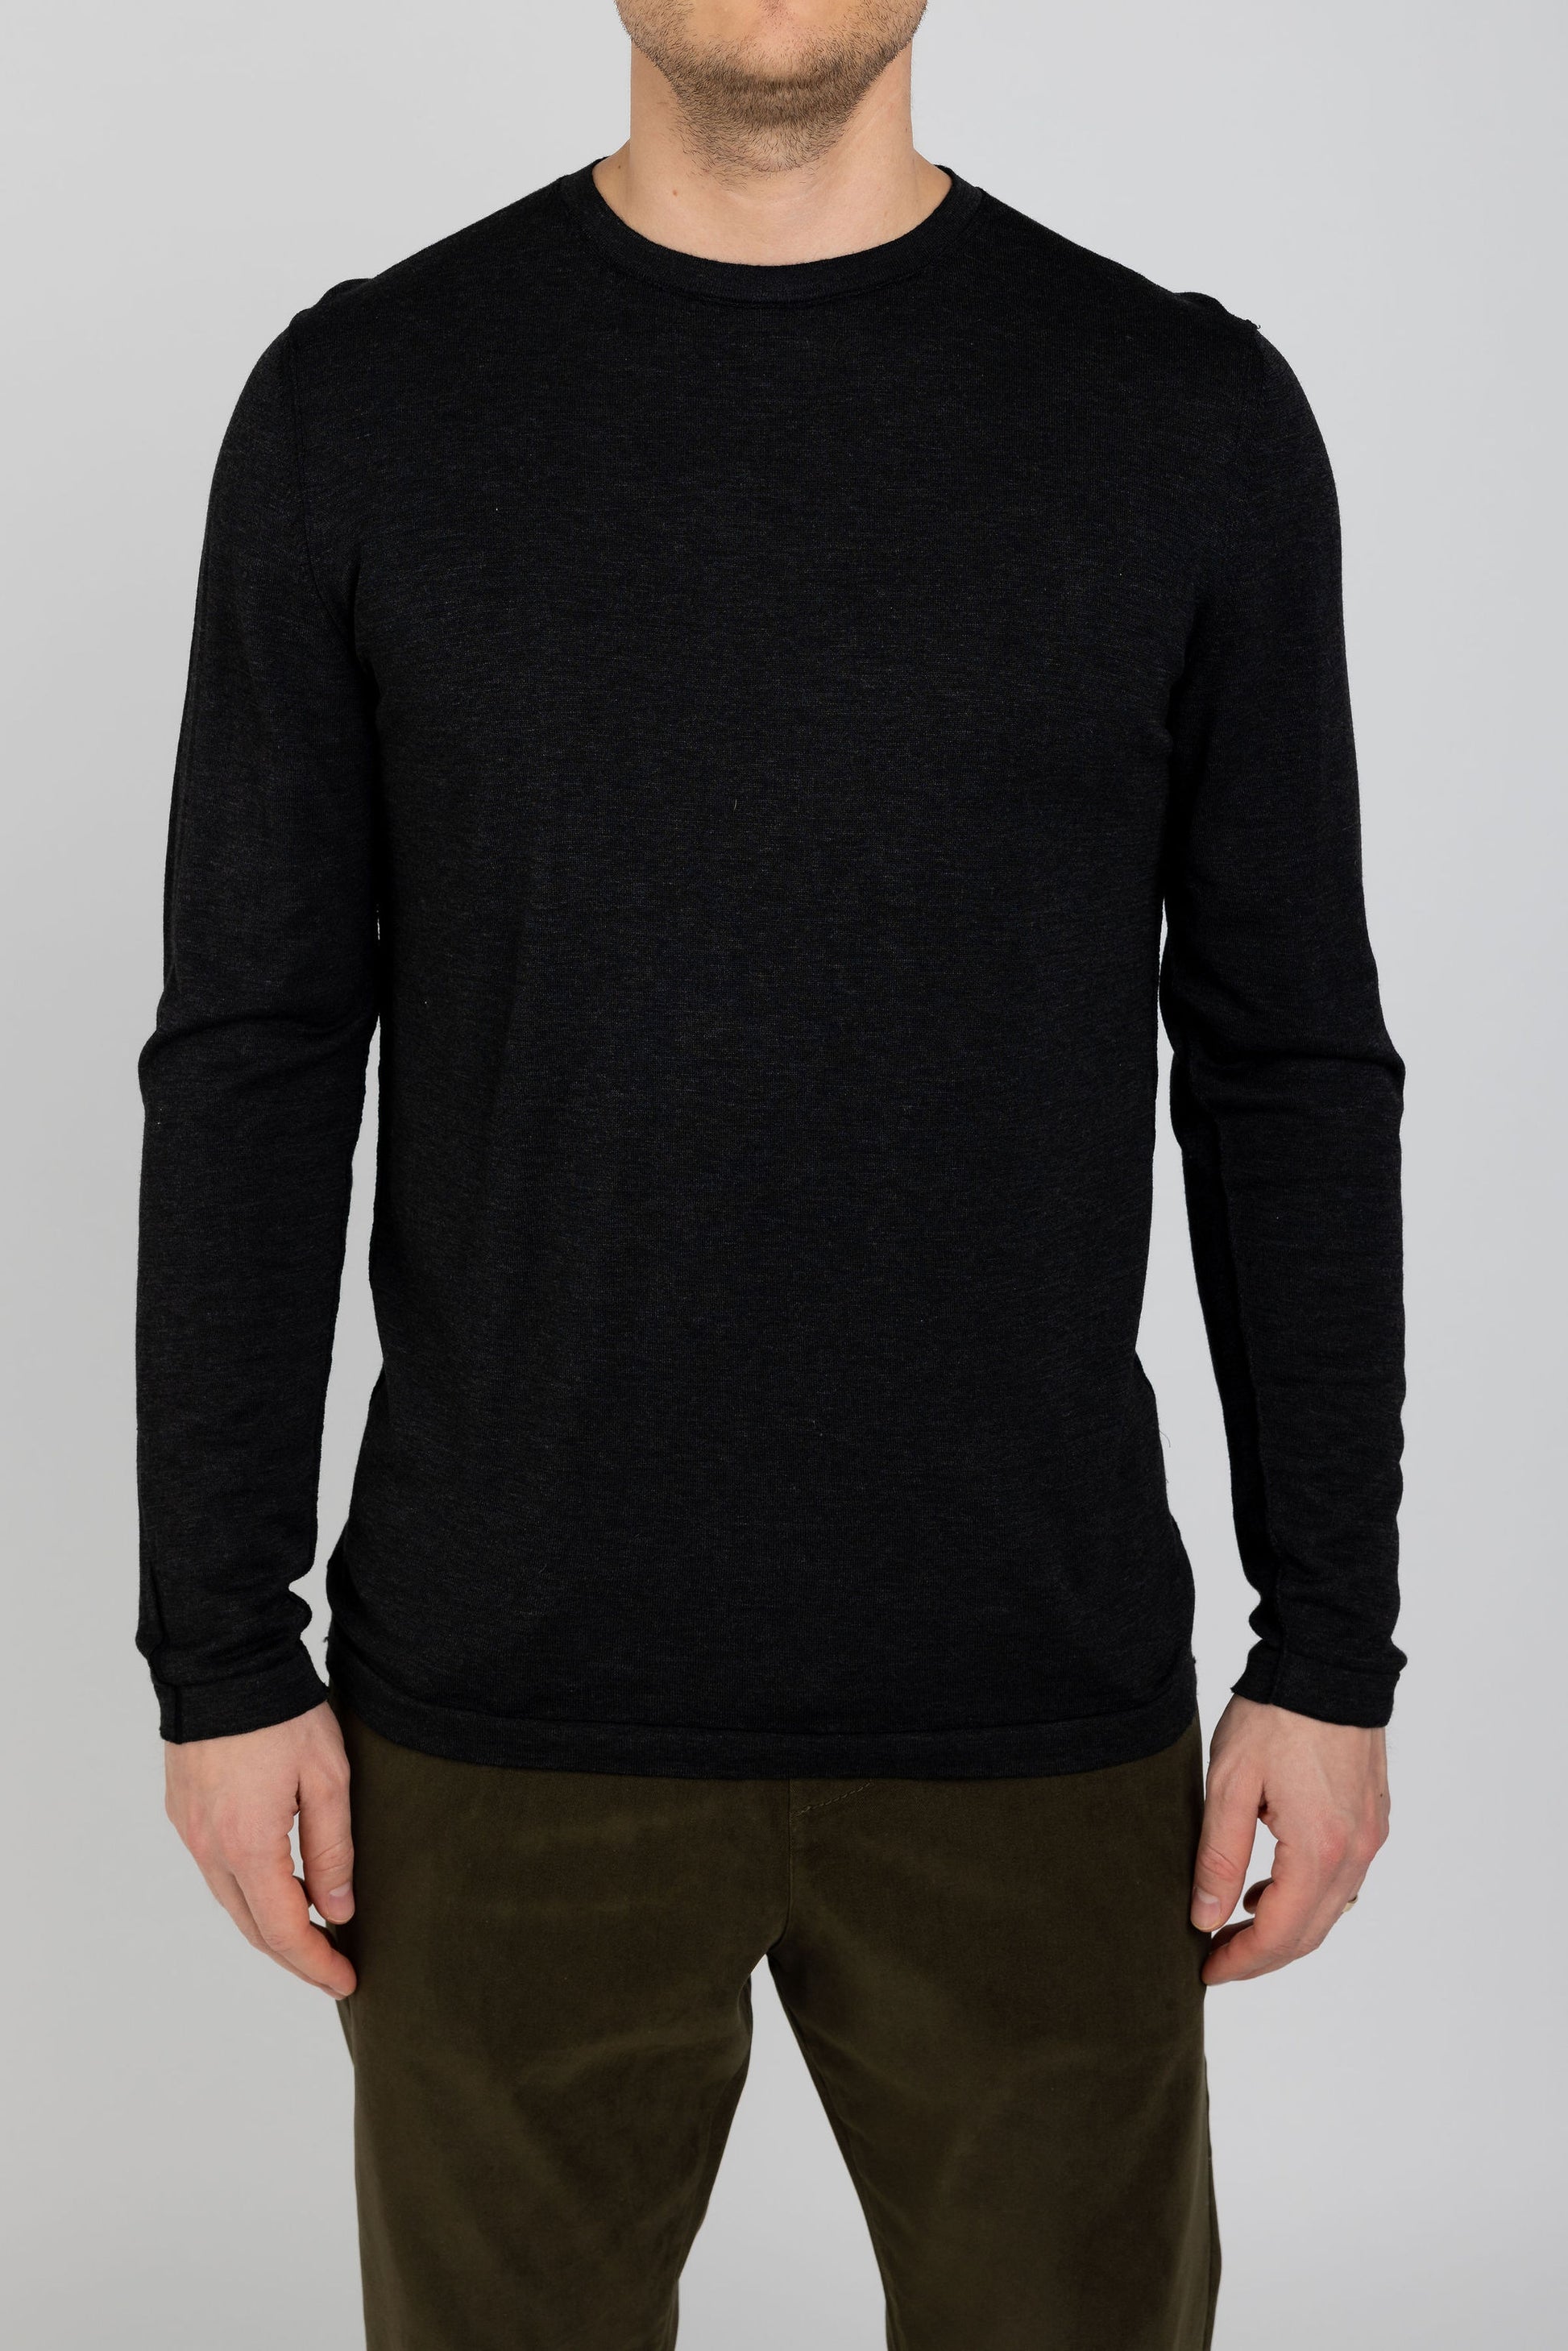 TRANSIT Crewneck Sweater in Grey Black